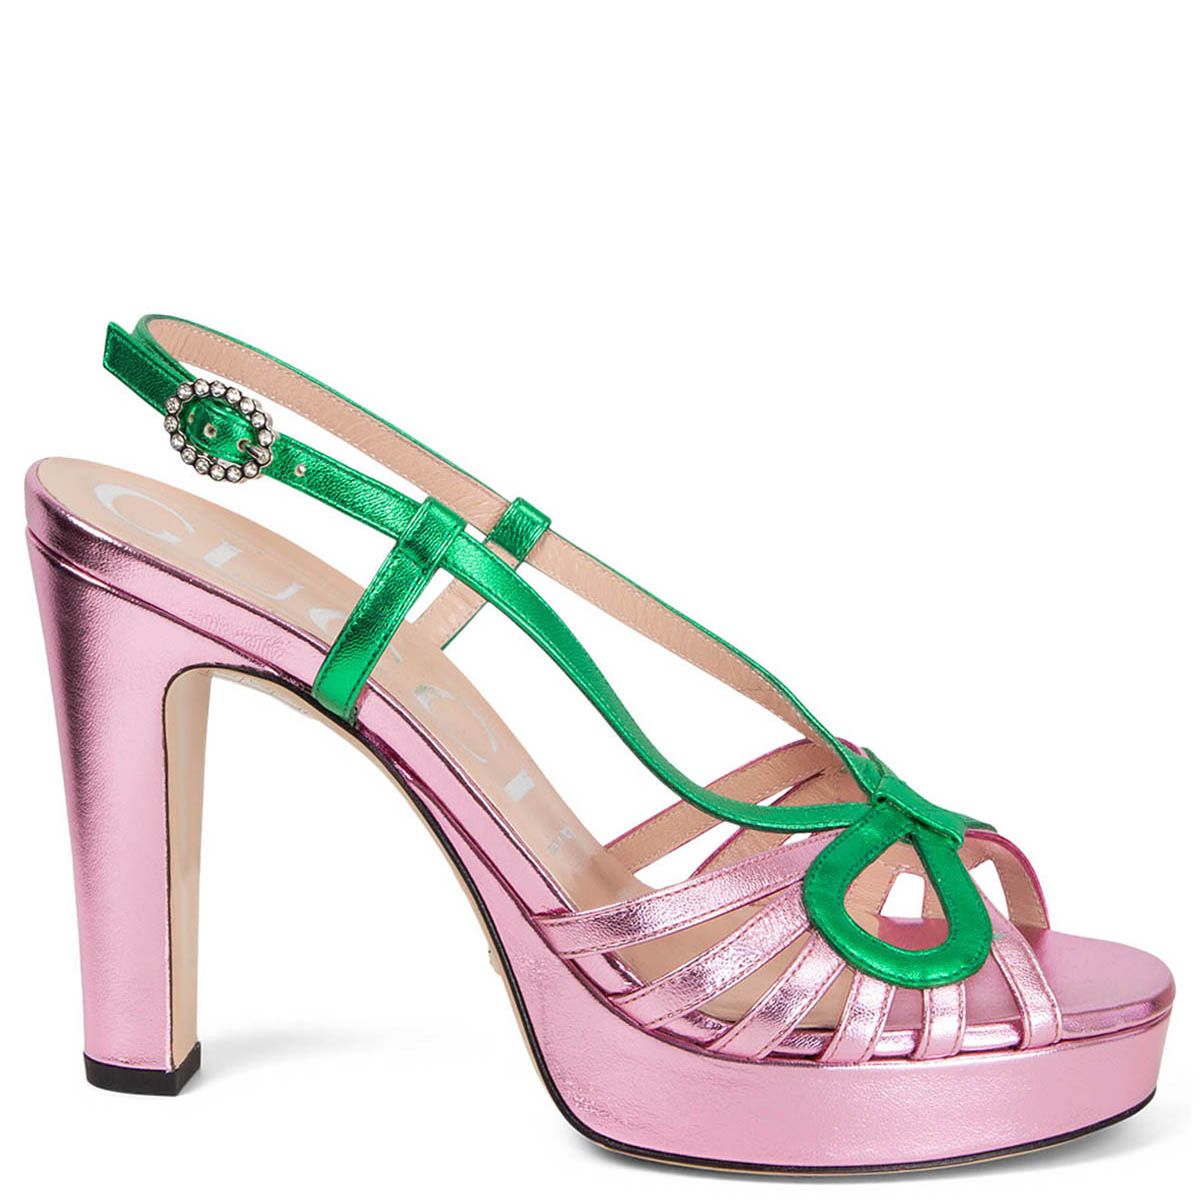 Gucci 2018 Zephyra Platform Sandals Metallic Pink Green Leather 38